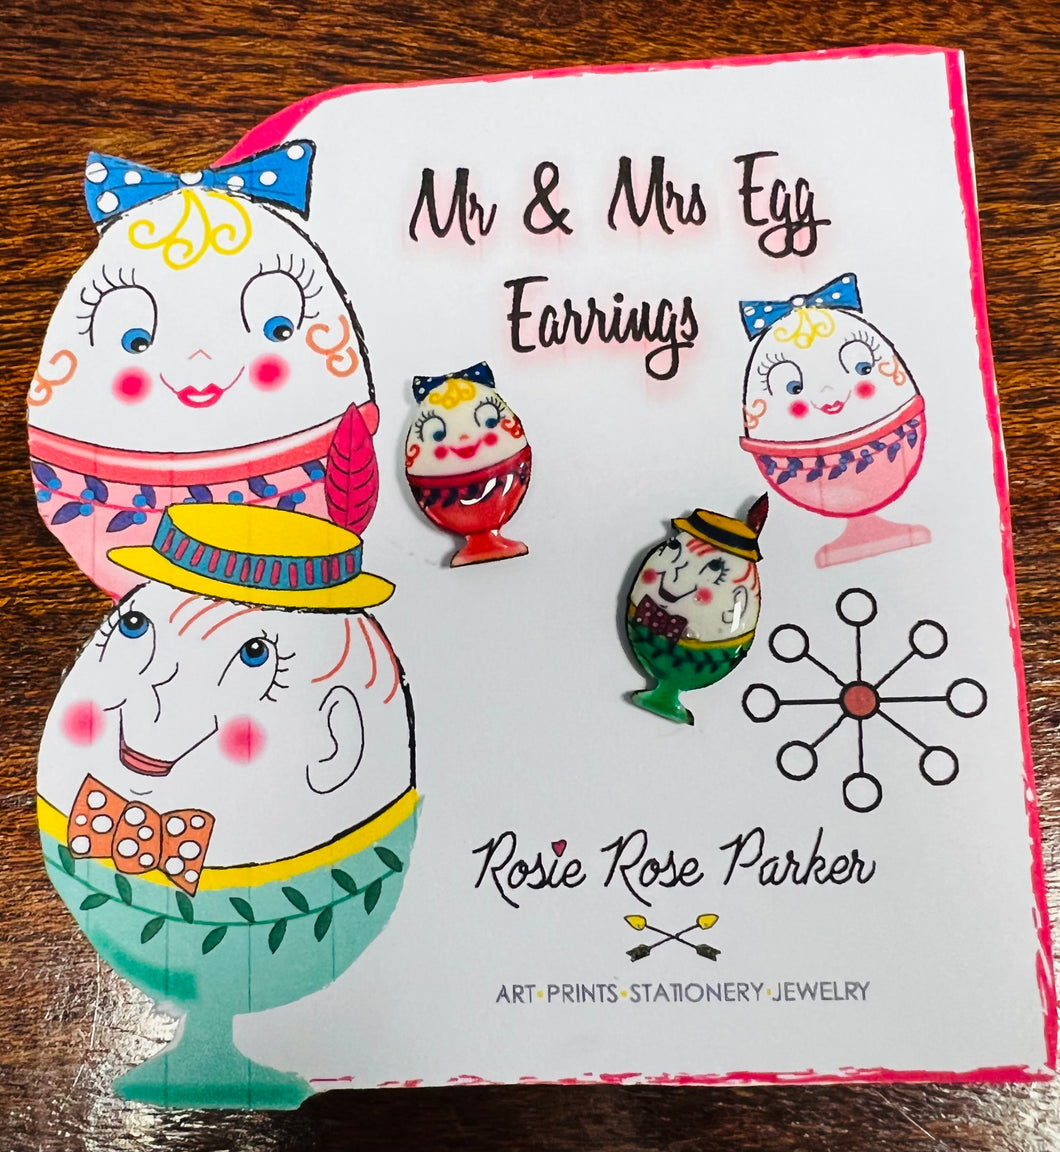 Clustlysau Mr & Mrs wy Kitsch / Kitsch Mr & Mrs egg earrings